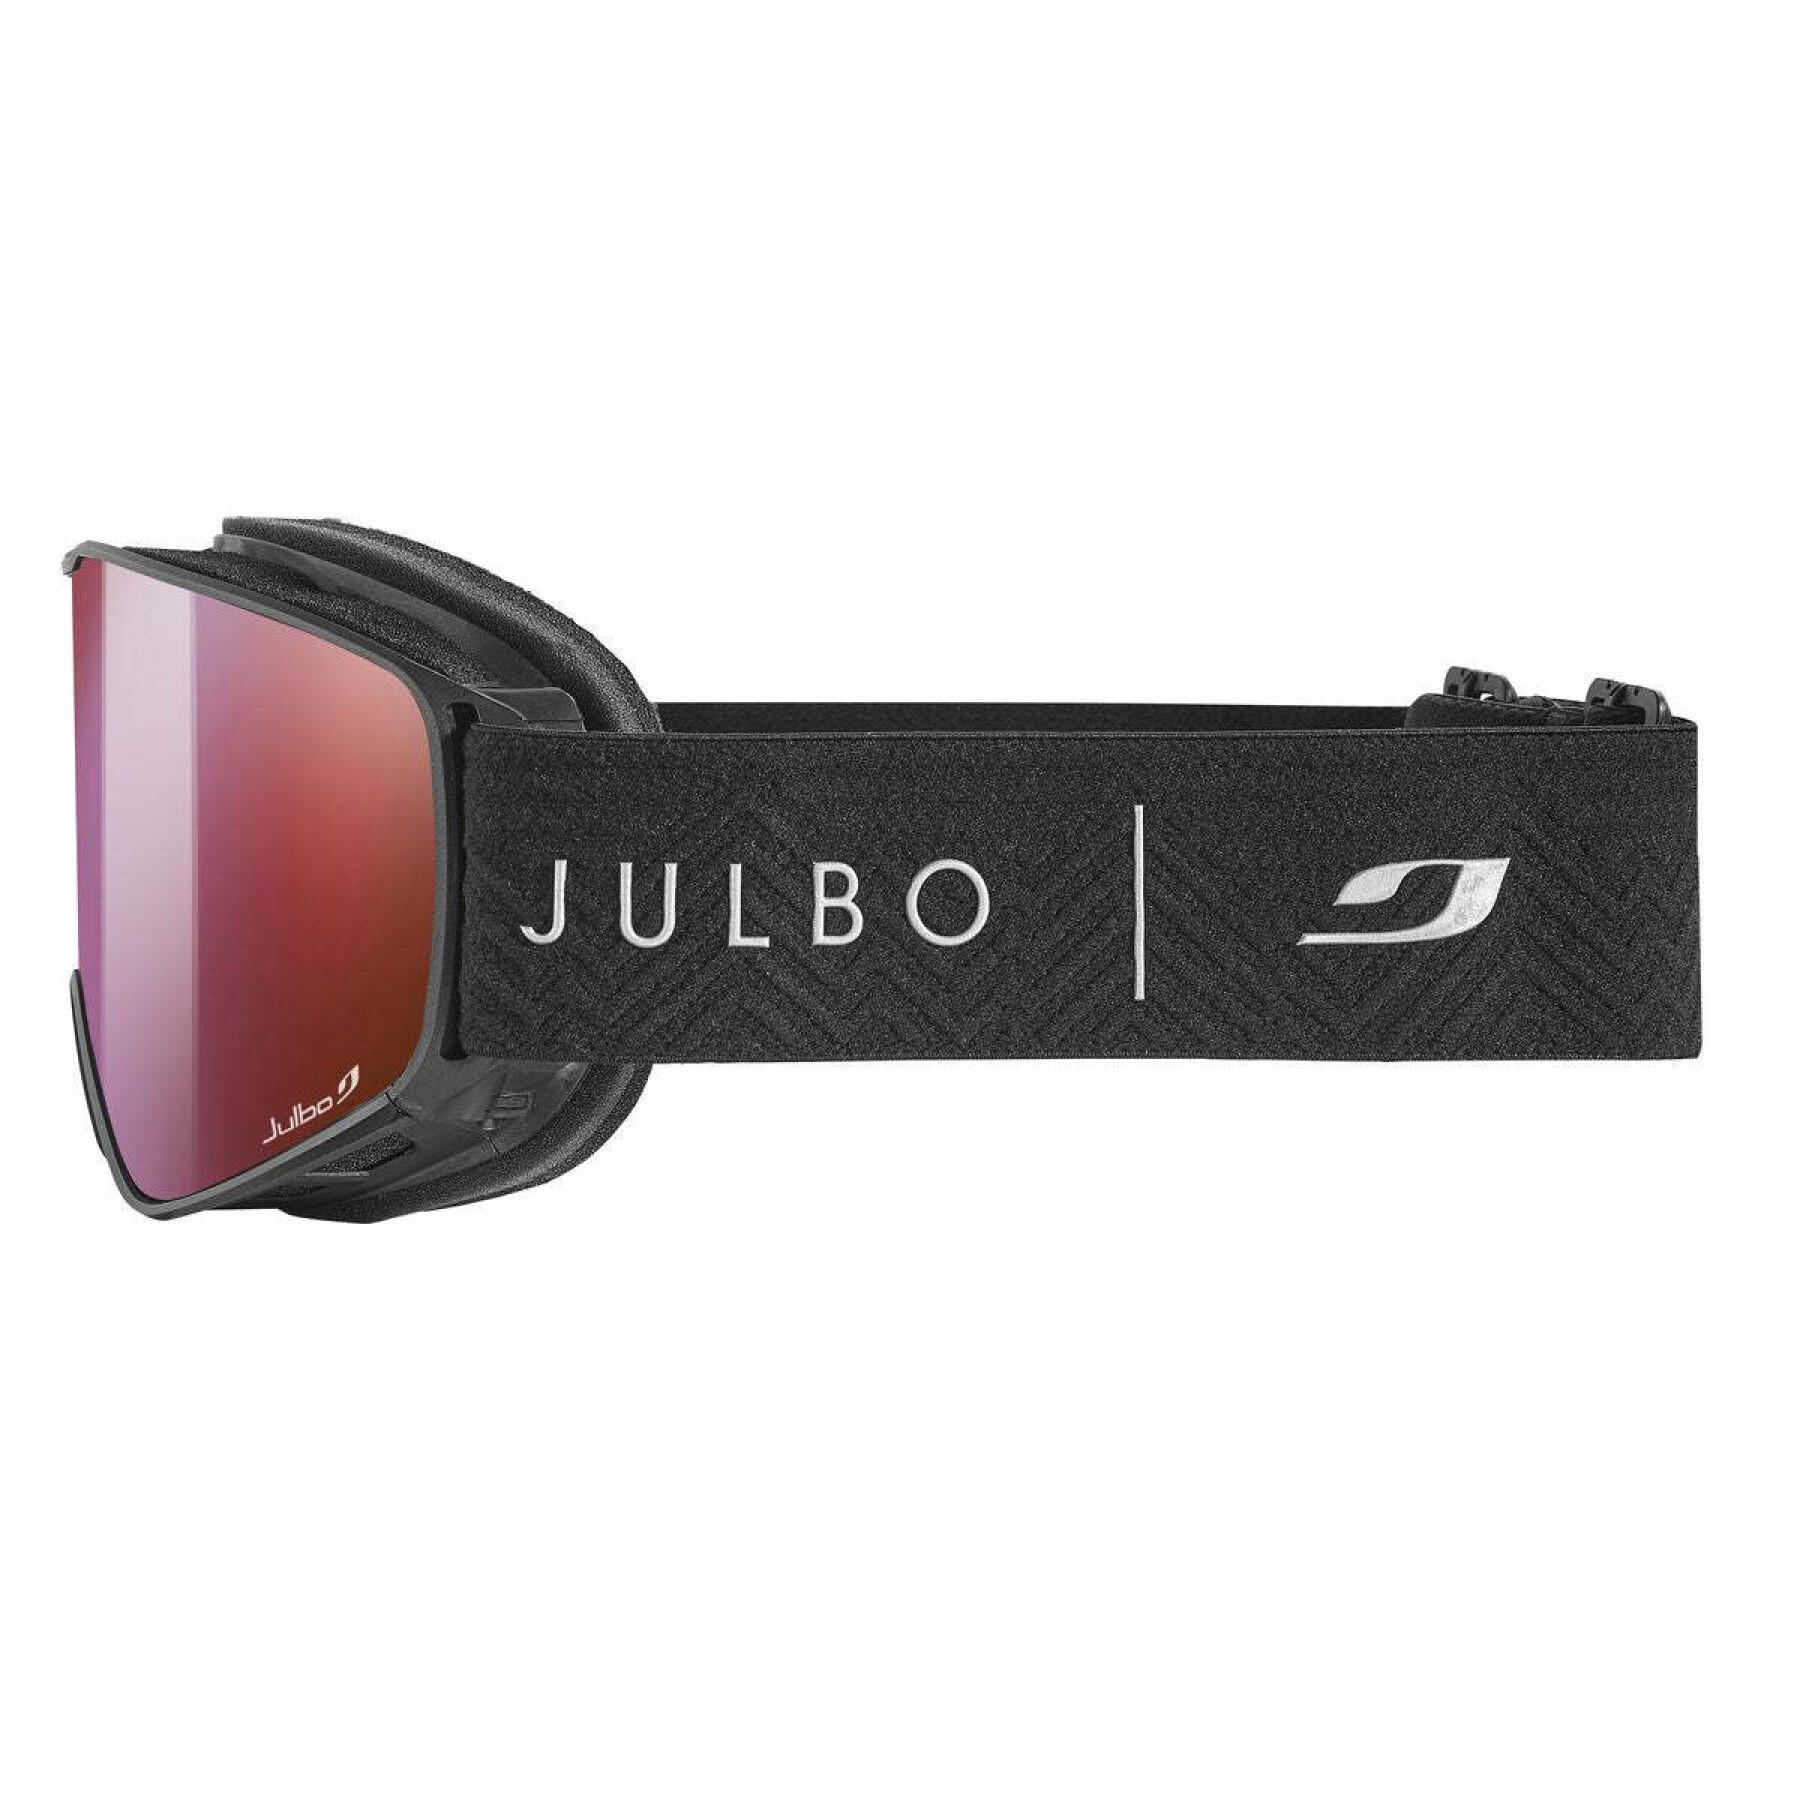 Skibrille Julbo Cyrius - Reactiv 0-4 High Contrast